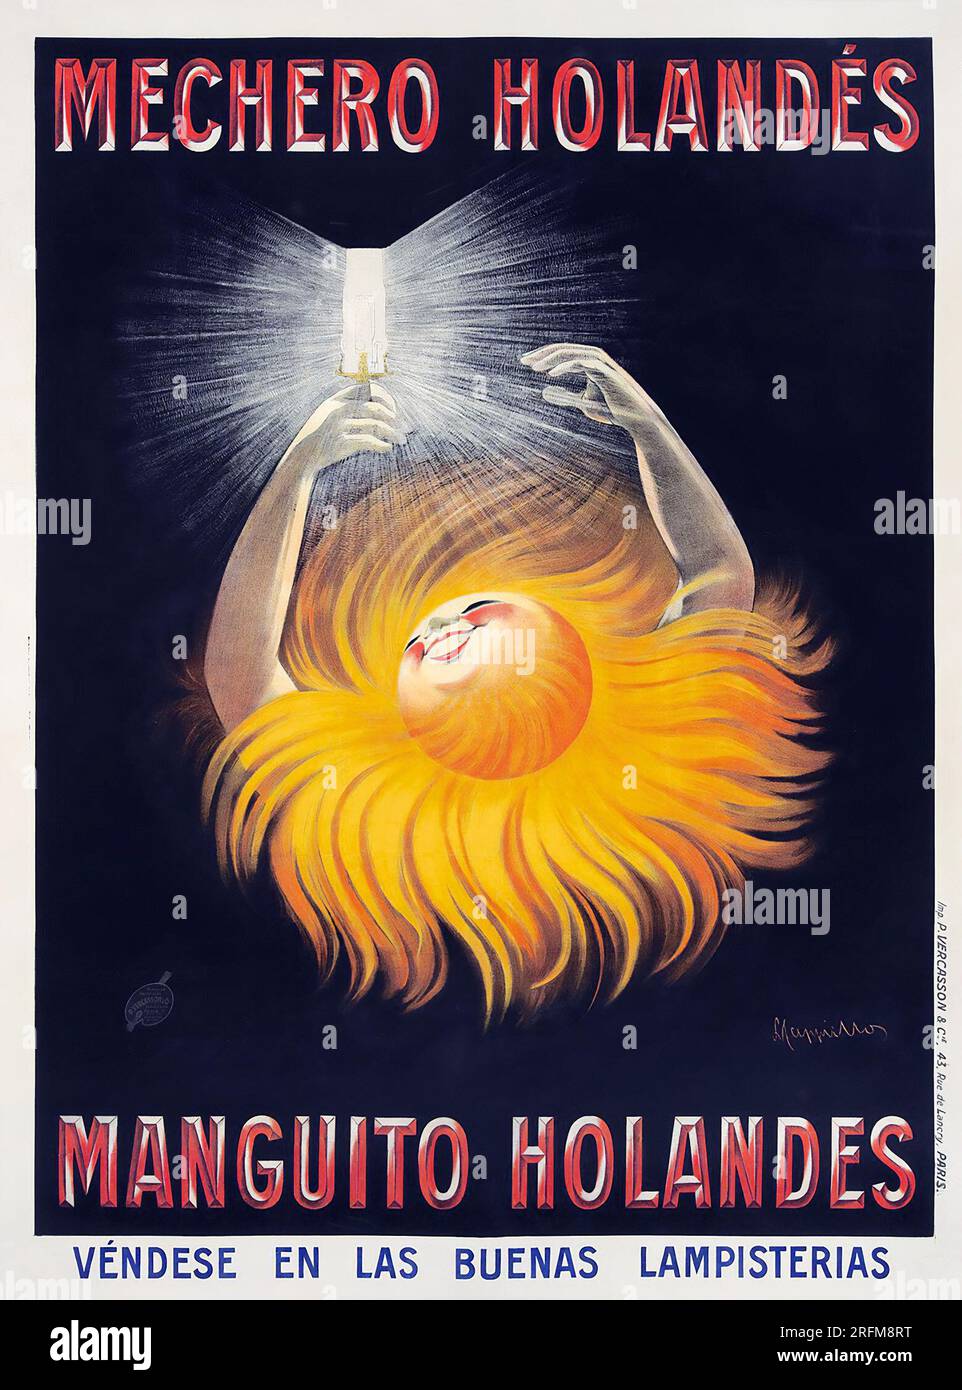 Mechero Holandés - Vintage advertisement poster by Leonetto Cappiello Stock Photo